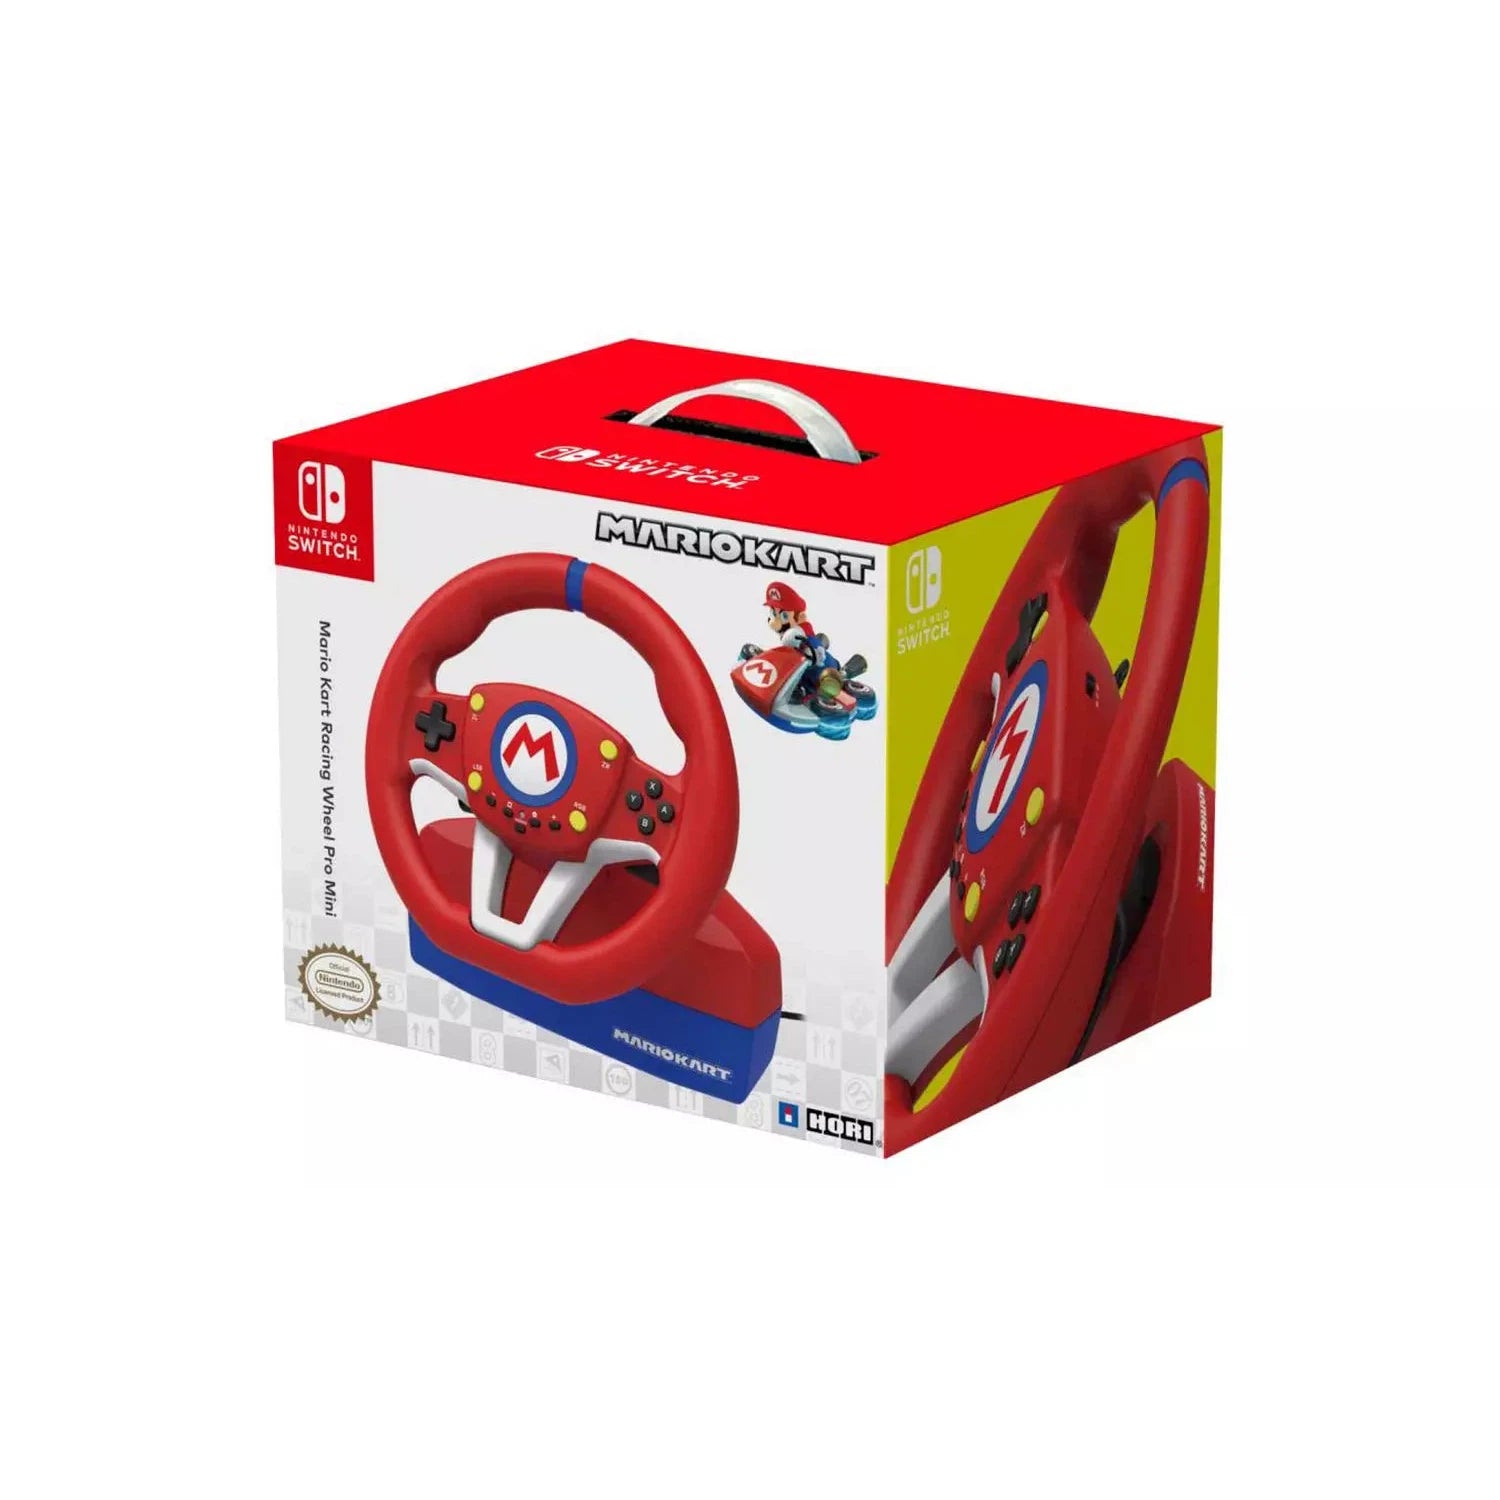 Hori Mario Kart Racing Wheel Pro Mini For Nintendo Switch - Refurbished Pristine